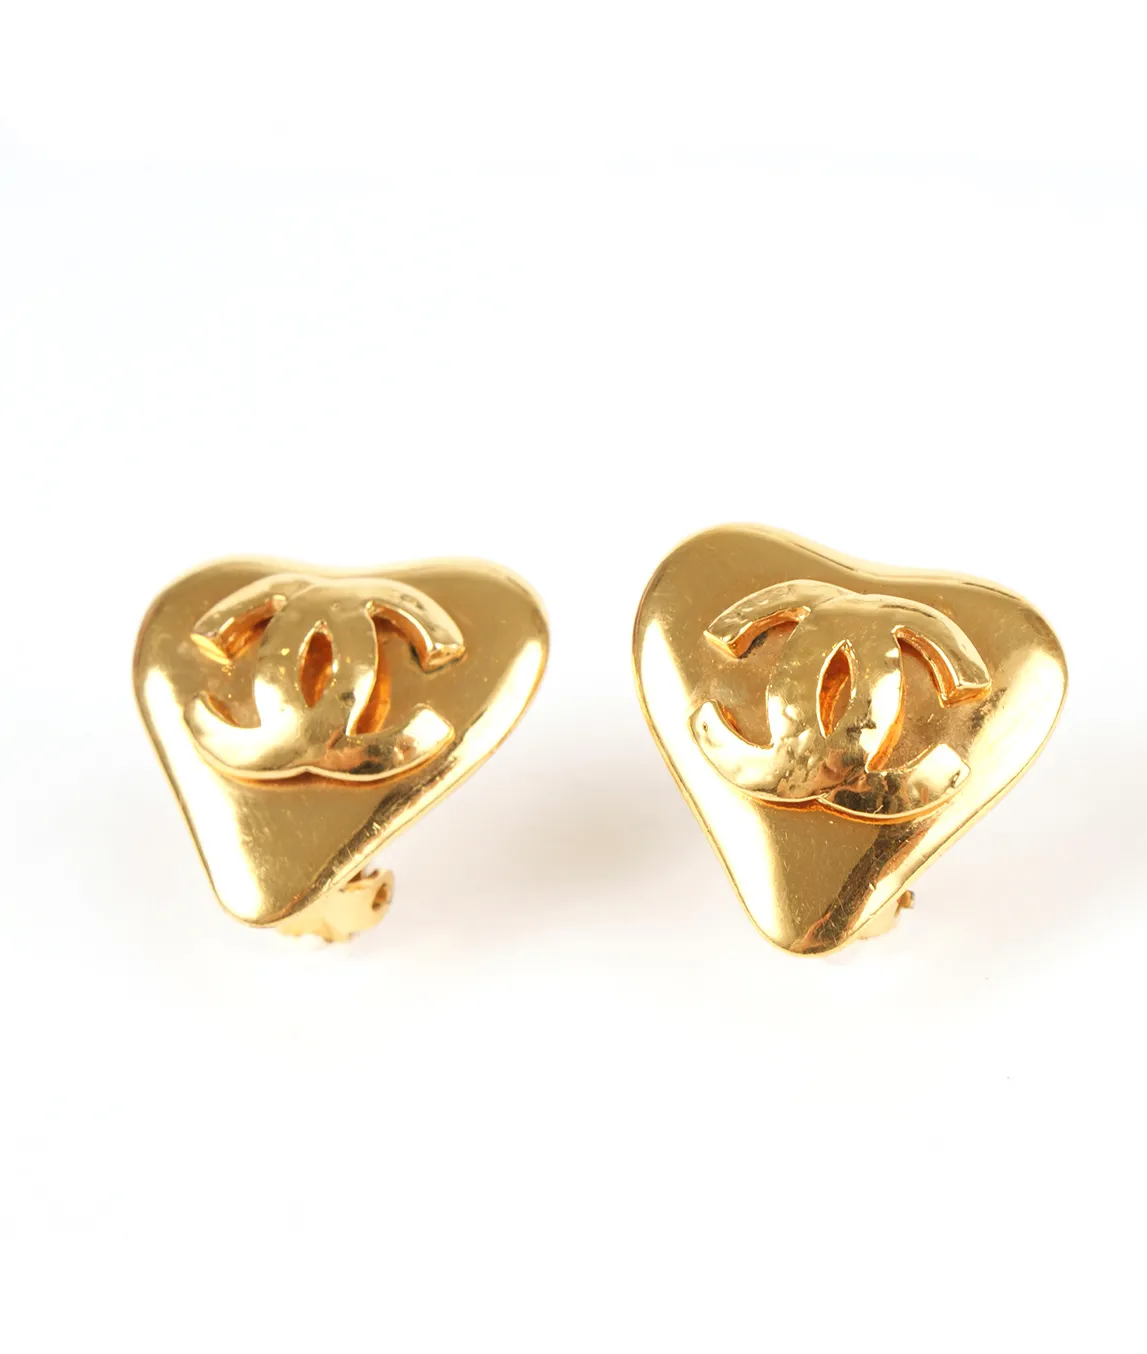 Vintage Chanel heart shaped earrings